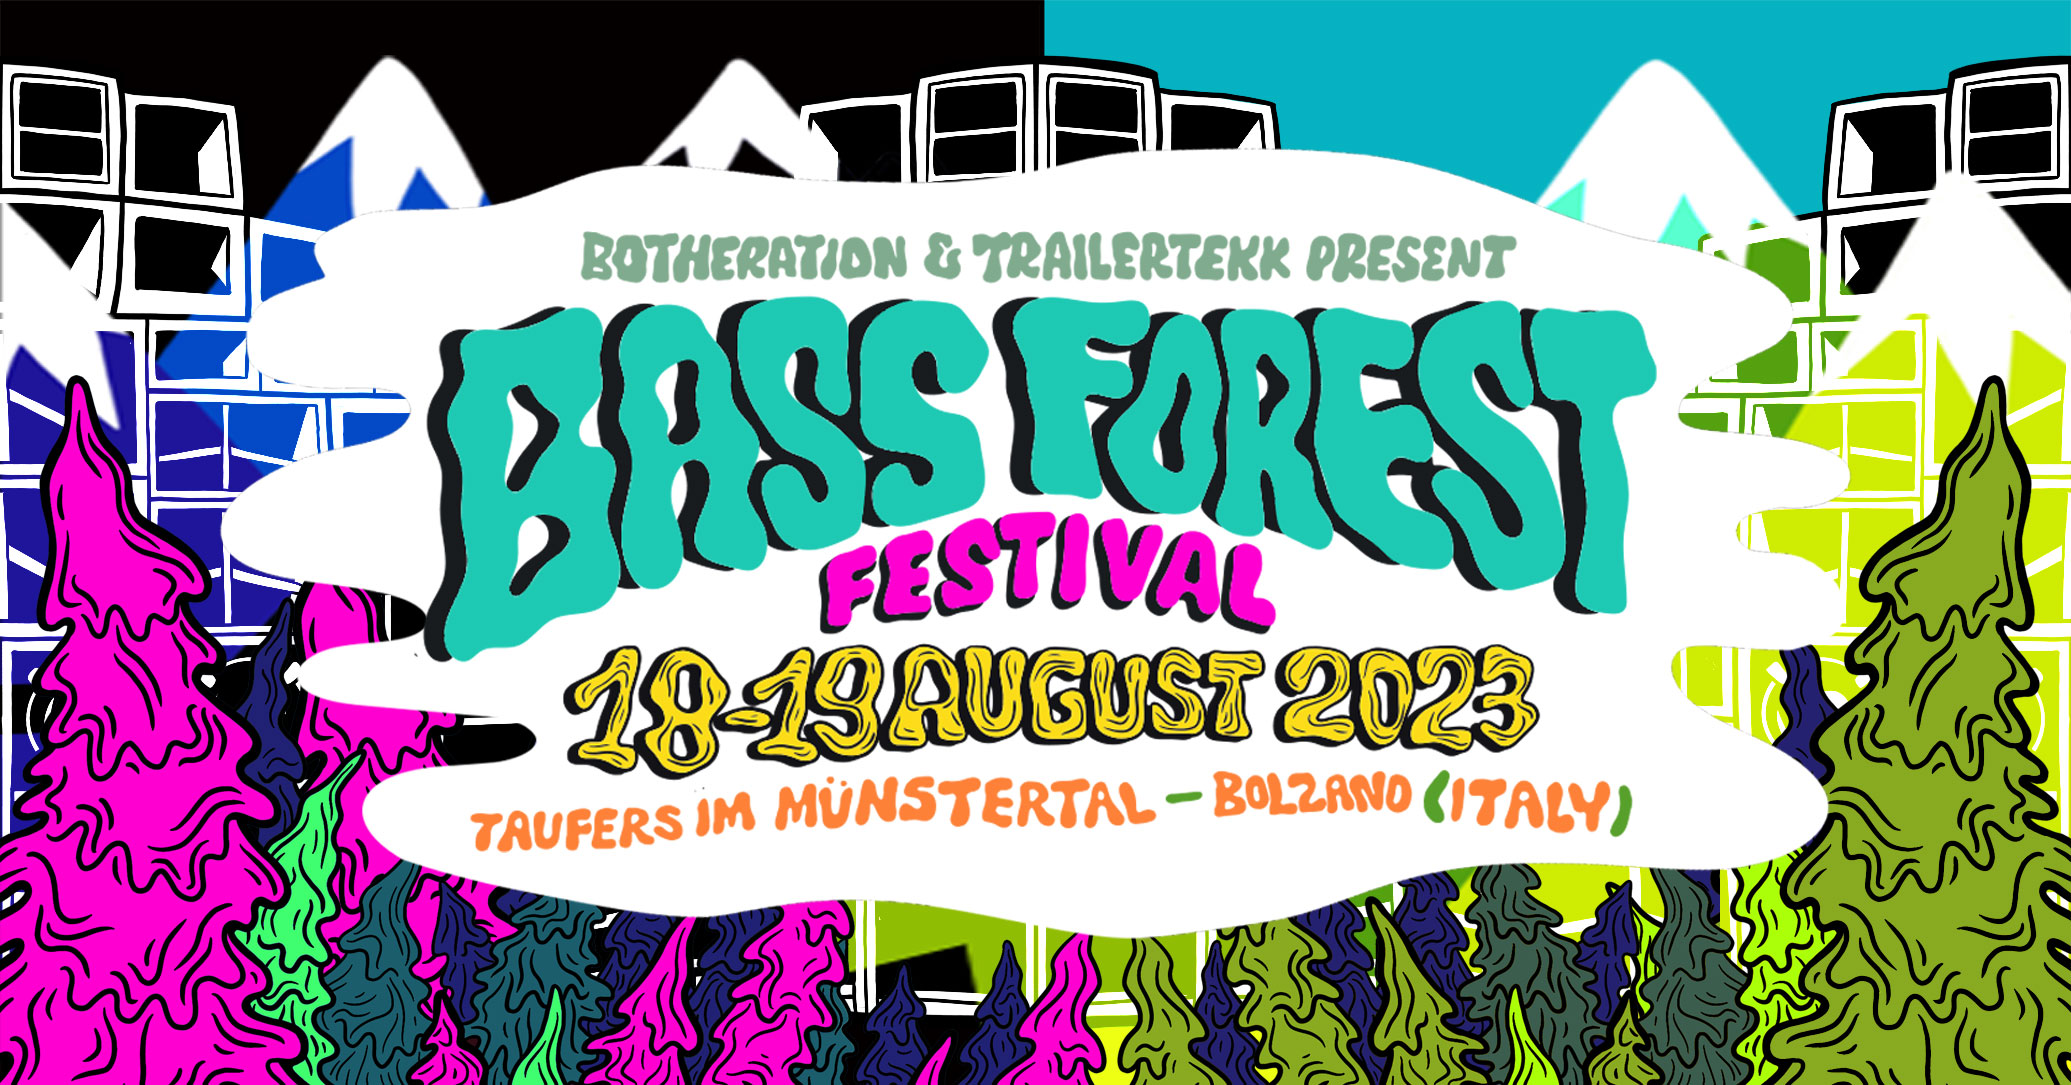 bass forest festival